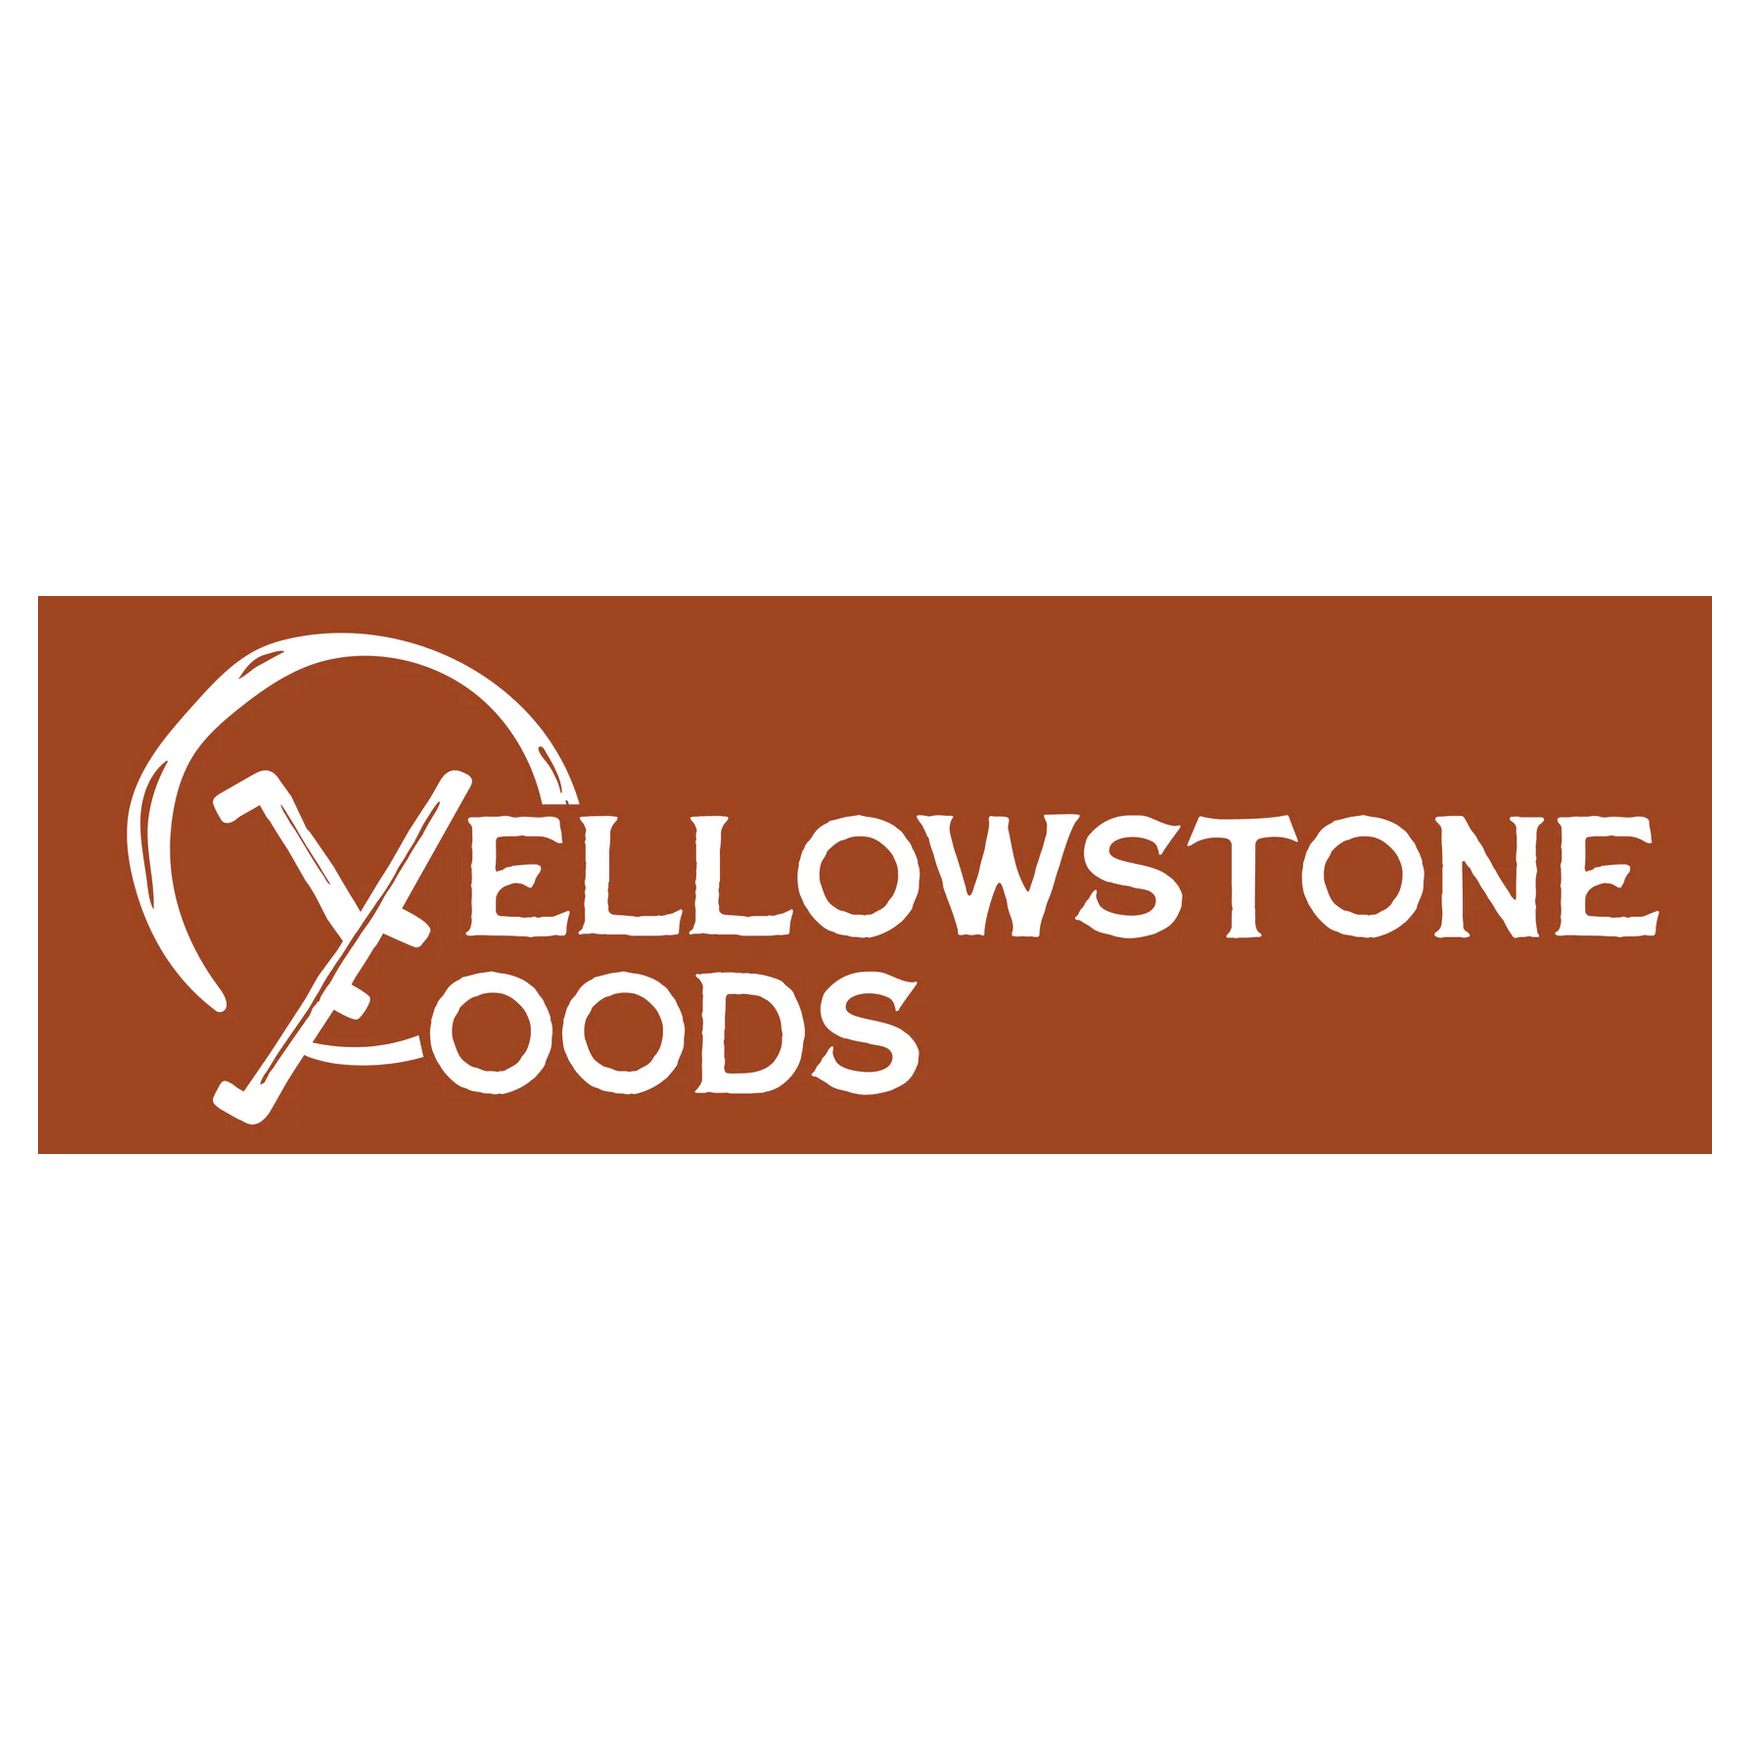 Yellowstone Foods